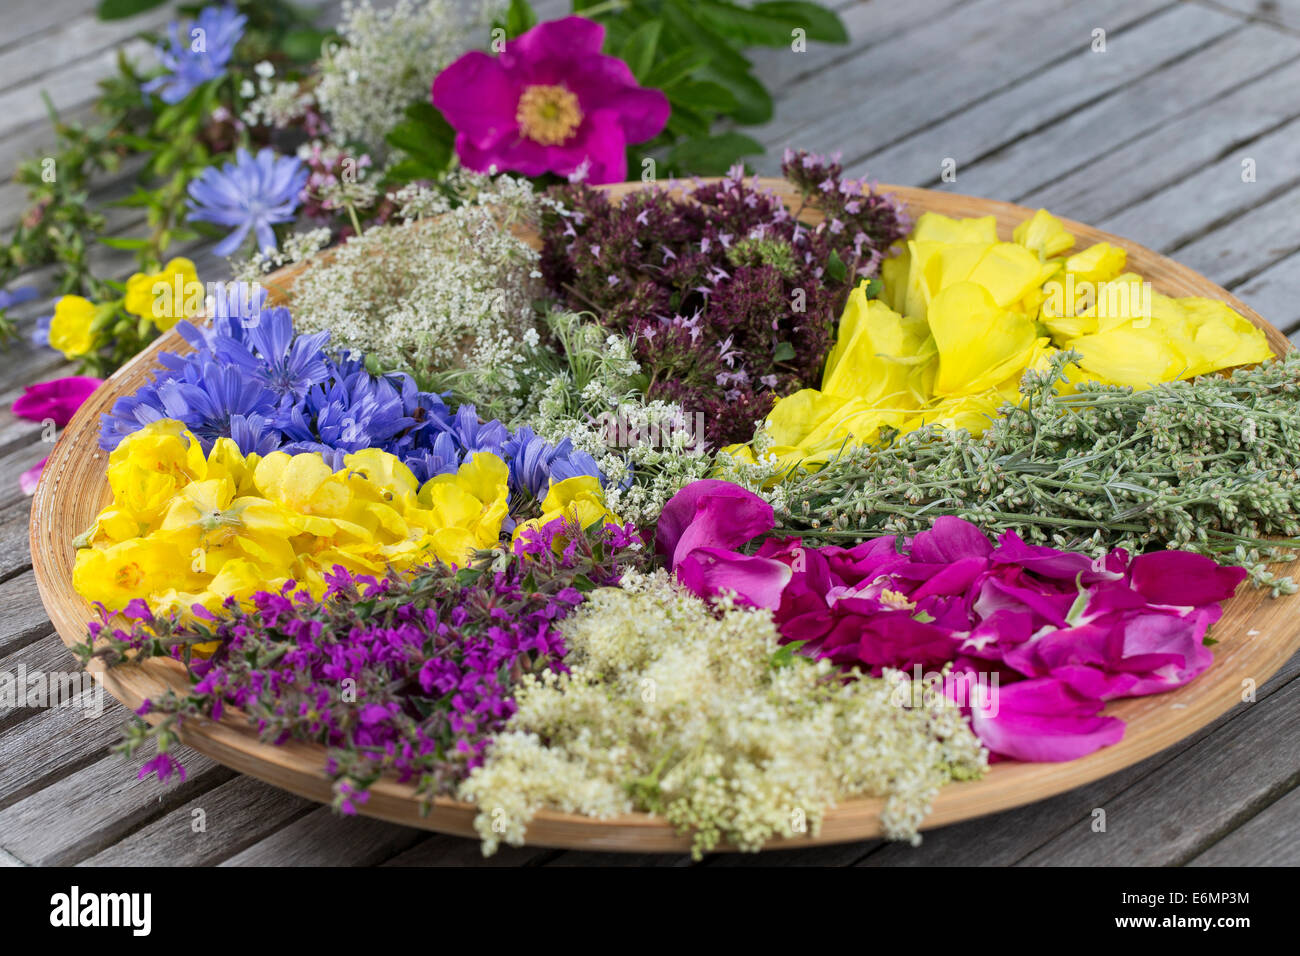 Blütenteller, Blüten, Blumen, Kräuter, Kräuter sammeln, Kräuterernte, Blütenblätter auf einem Teller sortiert zum Trocknen, essb ed Foto Stock